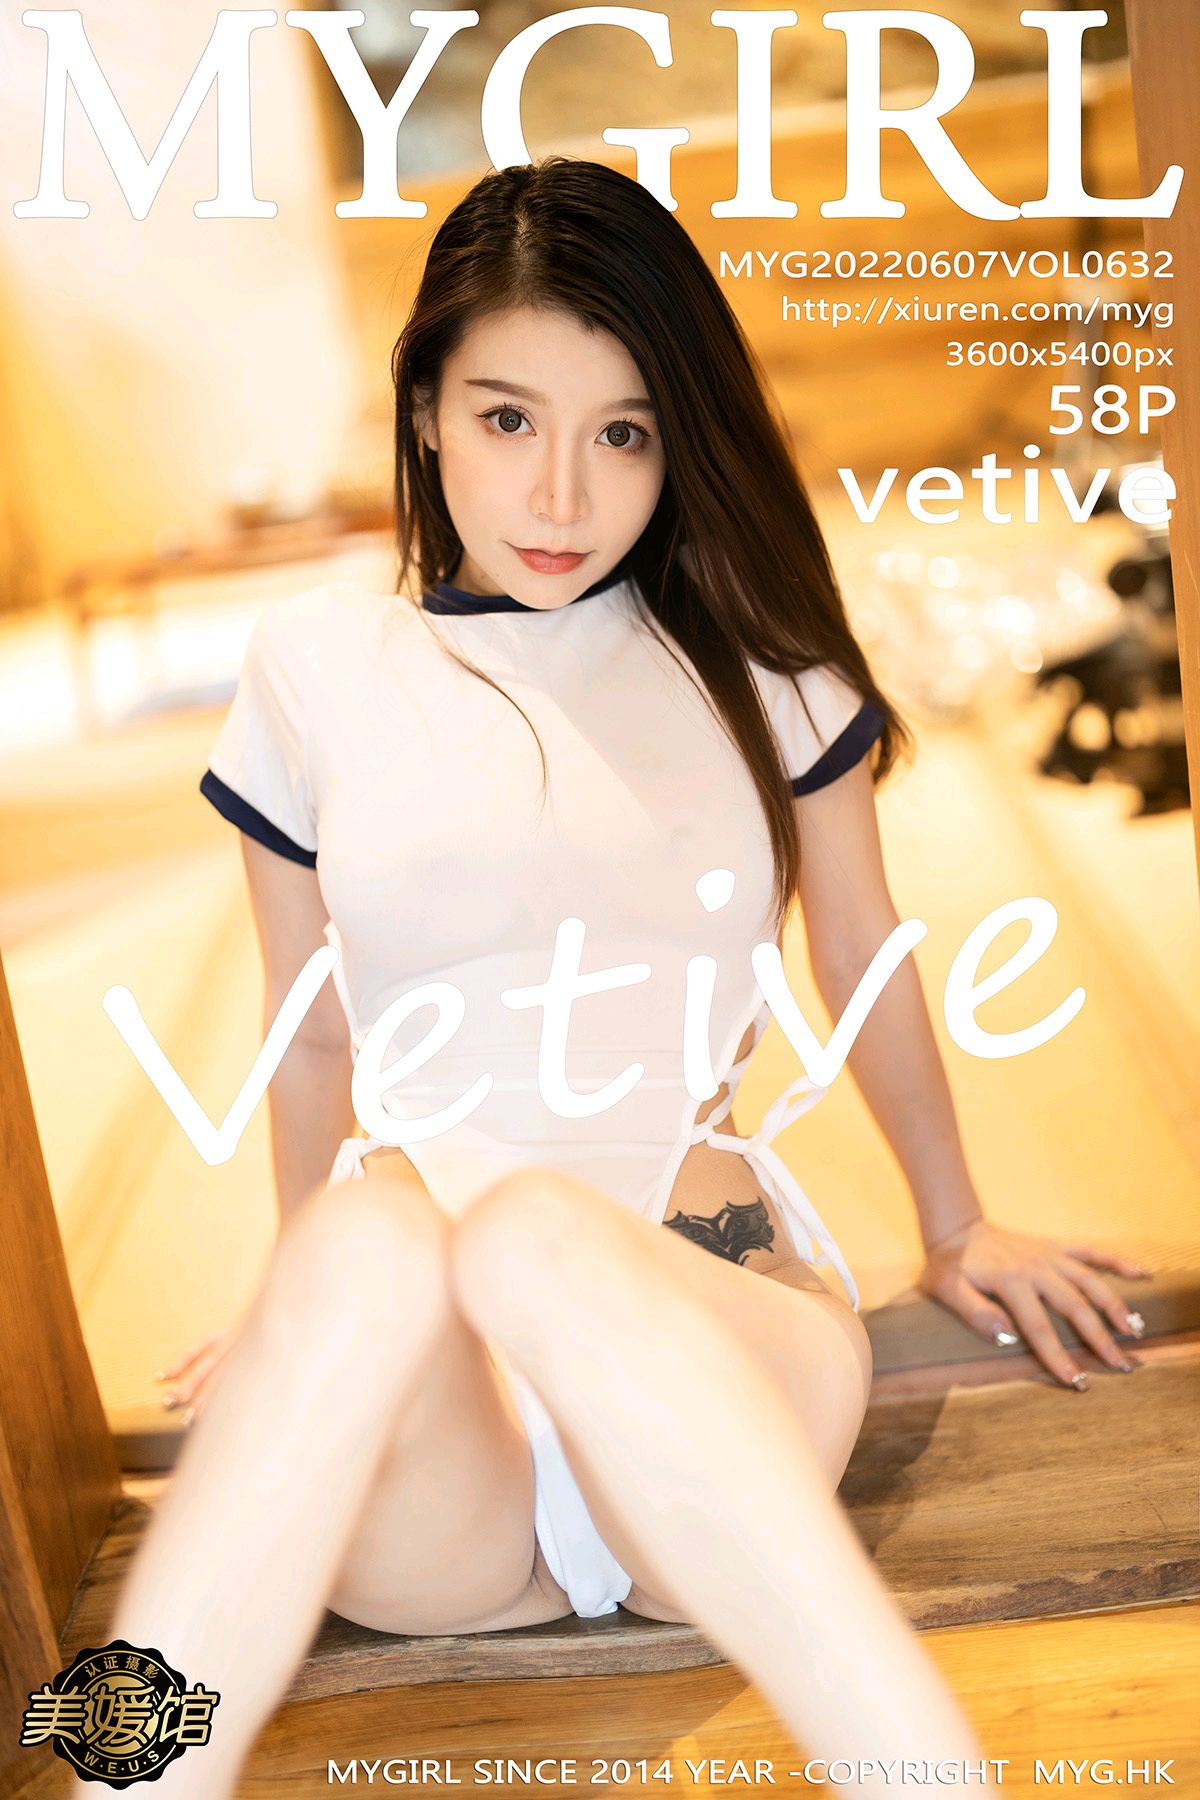  VOL.632 vetive 性感白色轻透写真 [58+1P]7